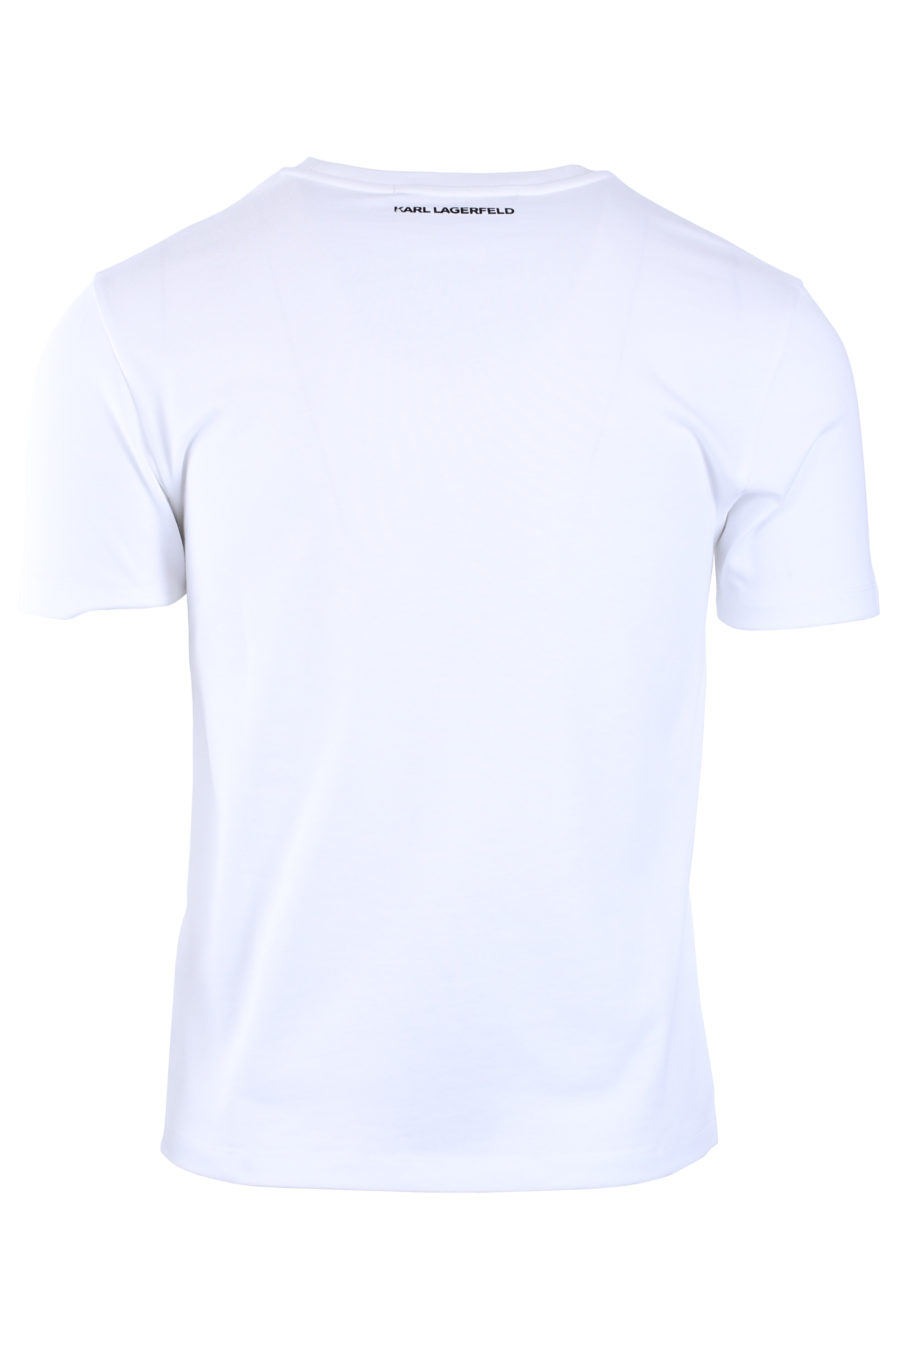 Camiseta unisex blanca con logo - IMG 9031